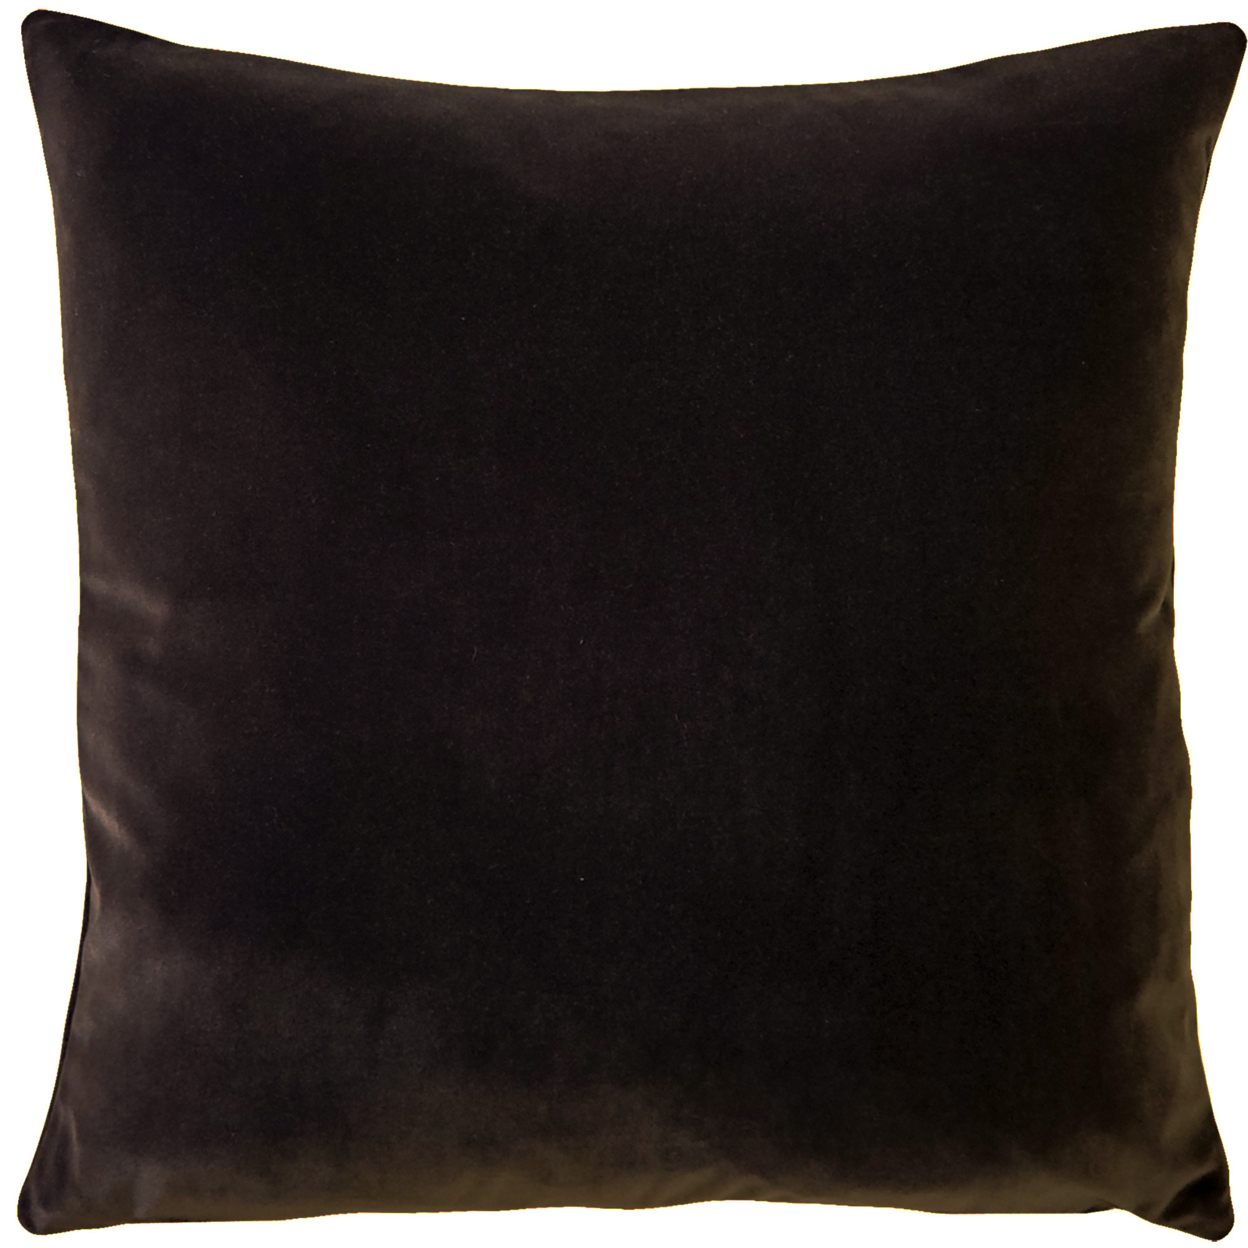 Castello Velvet Throw Pillows, Complete Pillow With Polyfill Pillow Insert (18 Colors, 3 Sizes) - Deep Yellow, 12x20